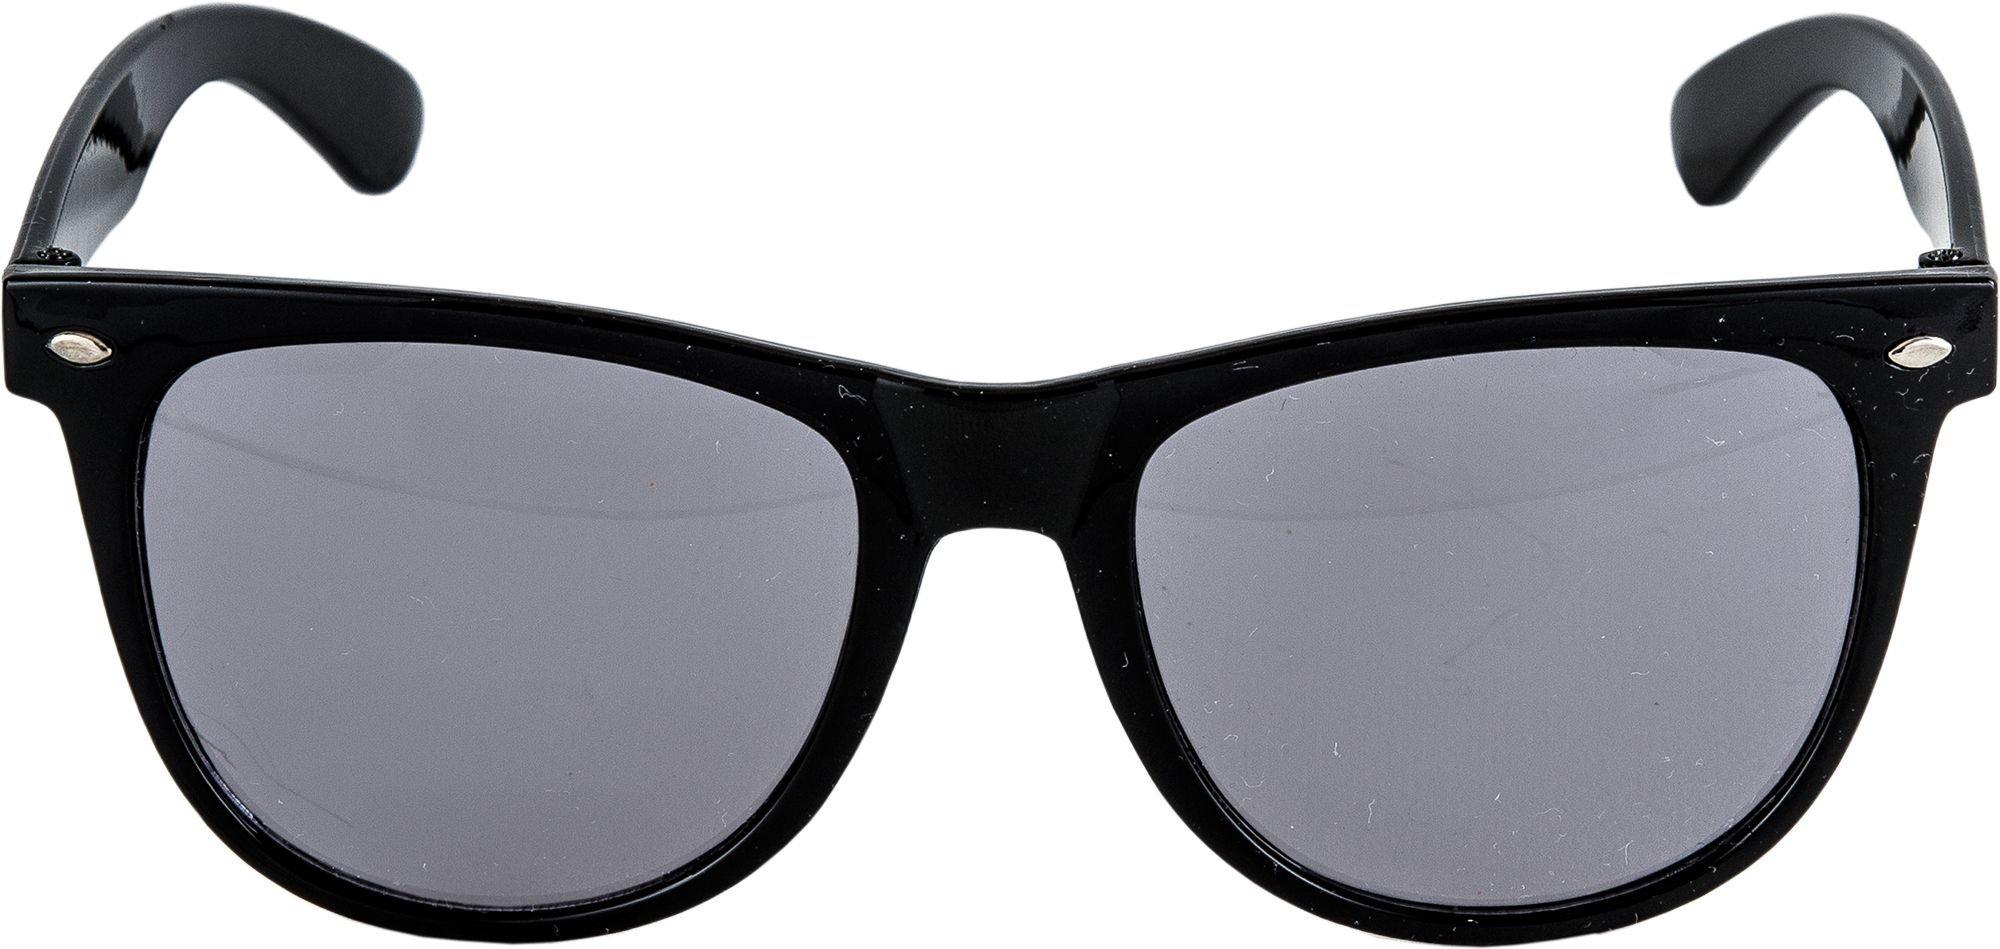 Men's spring summer outfit with black plain sunglasses, gray plain